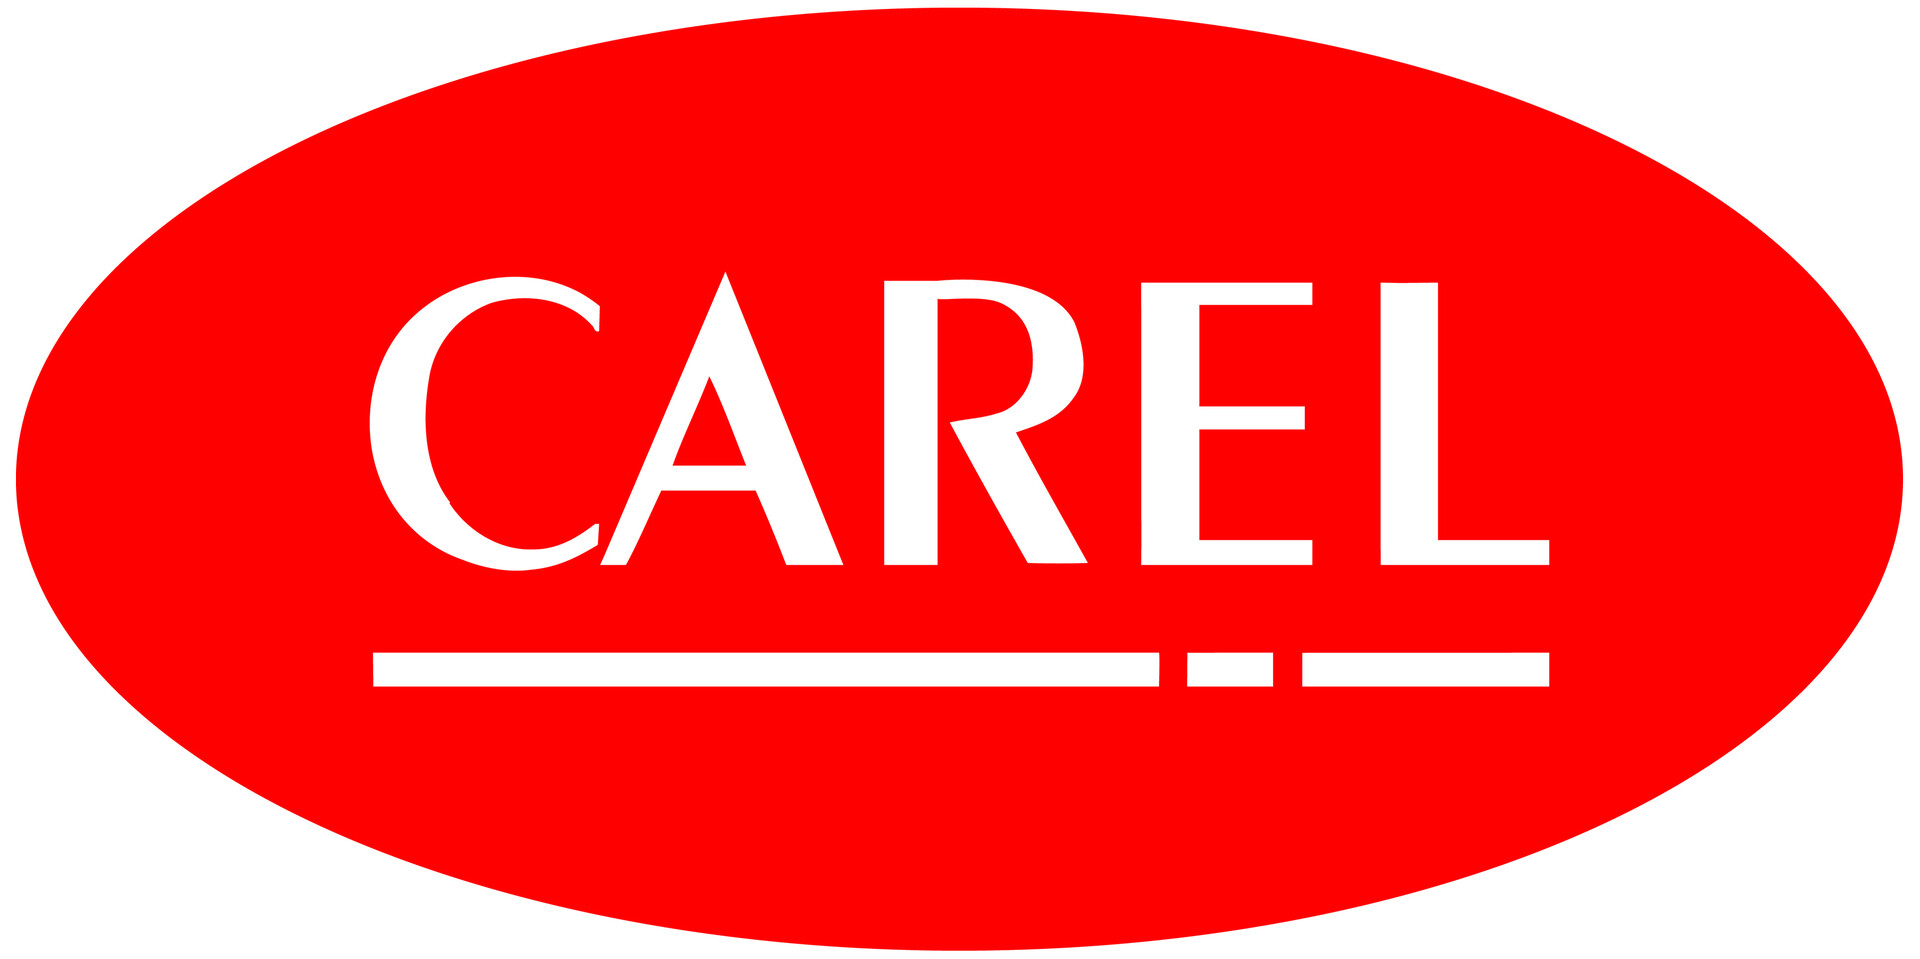 Carel logo Bricop